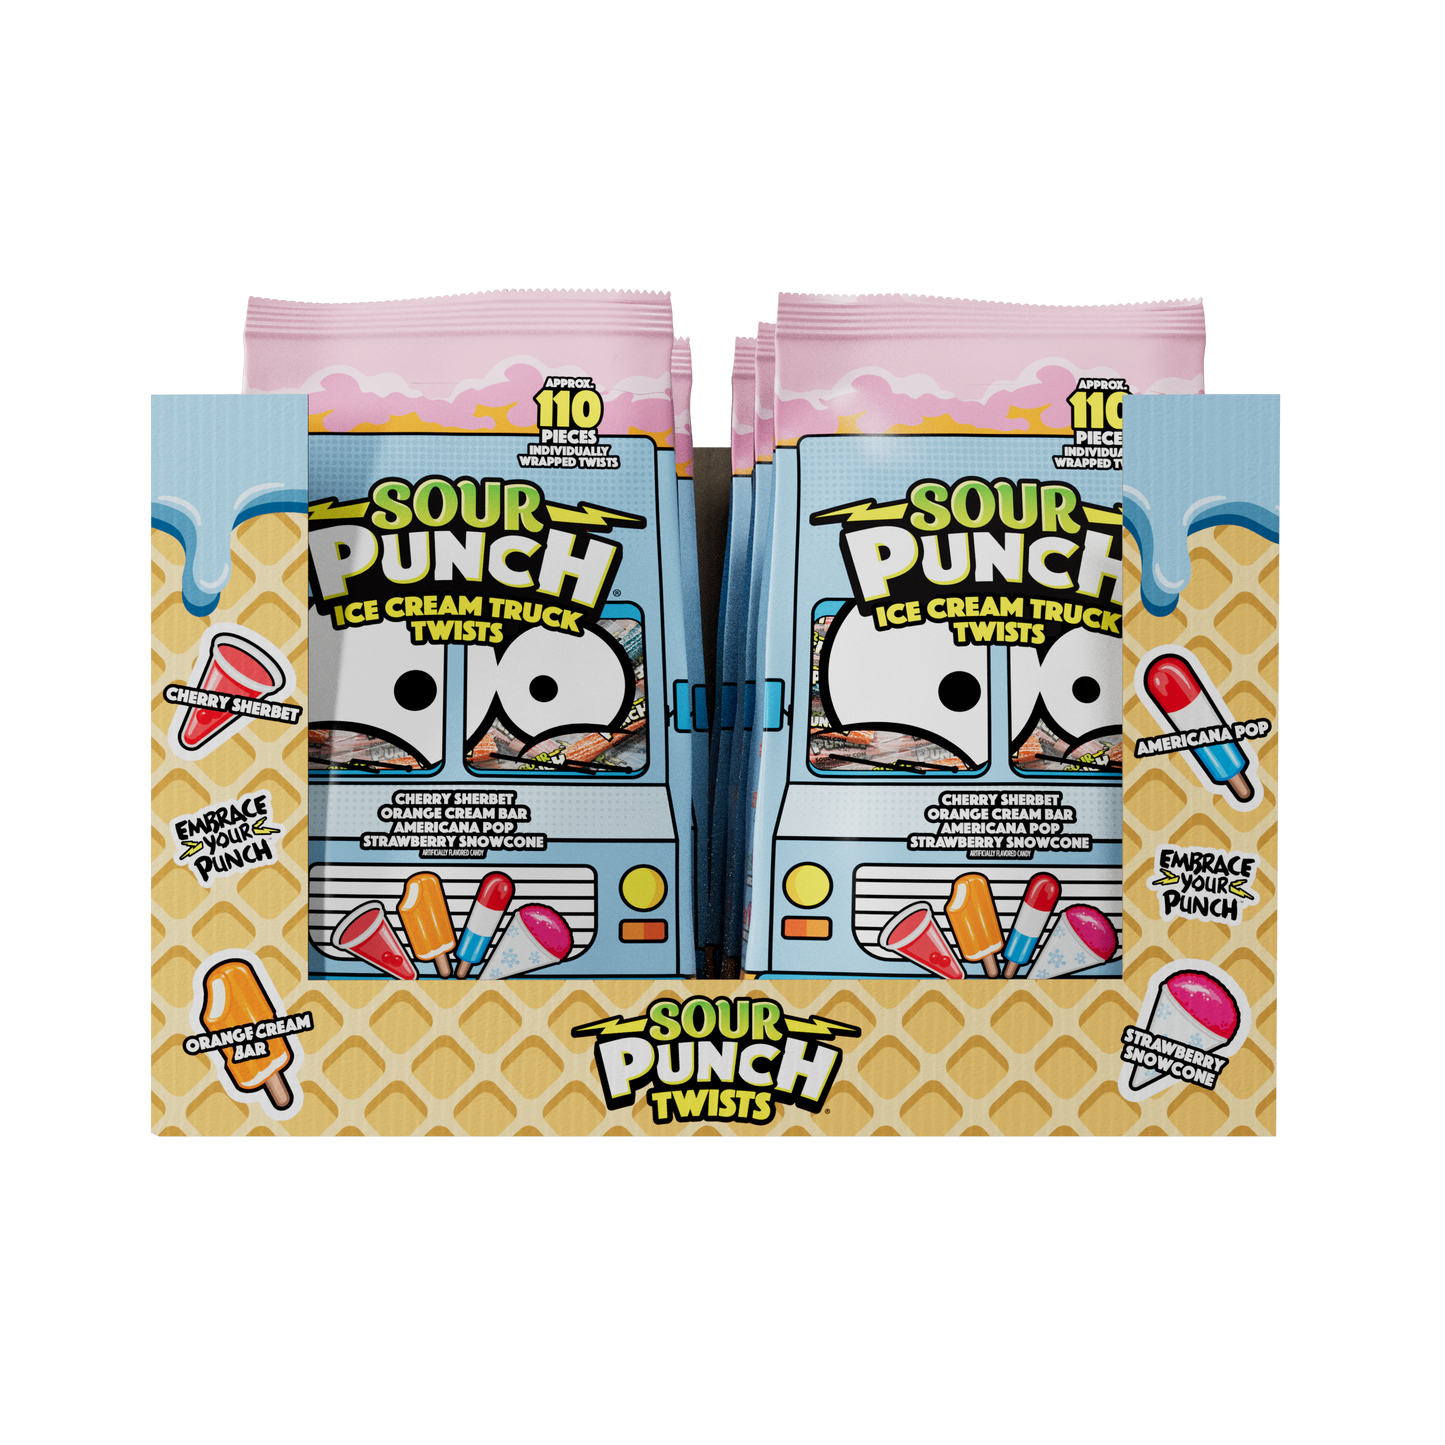 Sour Punch 3"Twist Ice Cream Truck Gusset 24.50oz 6ct